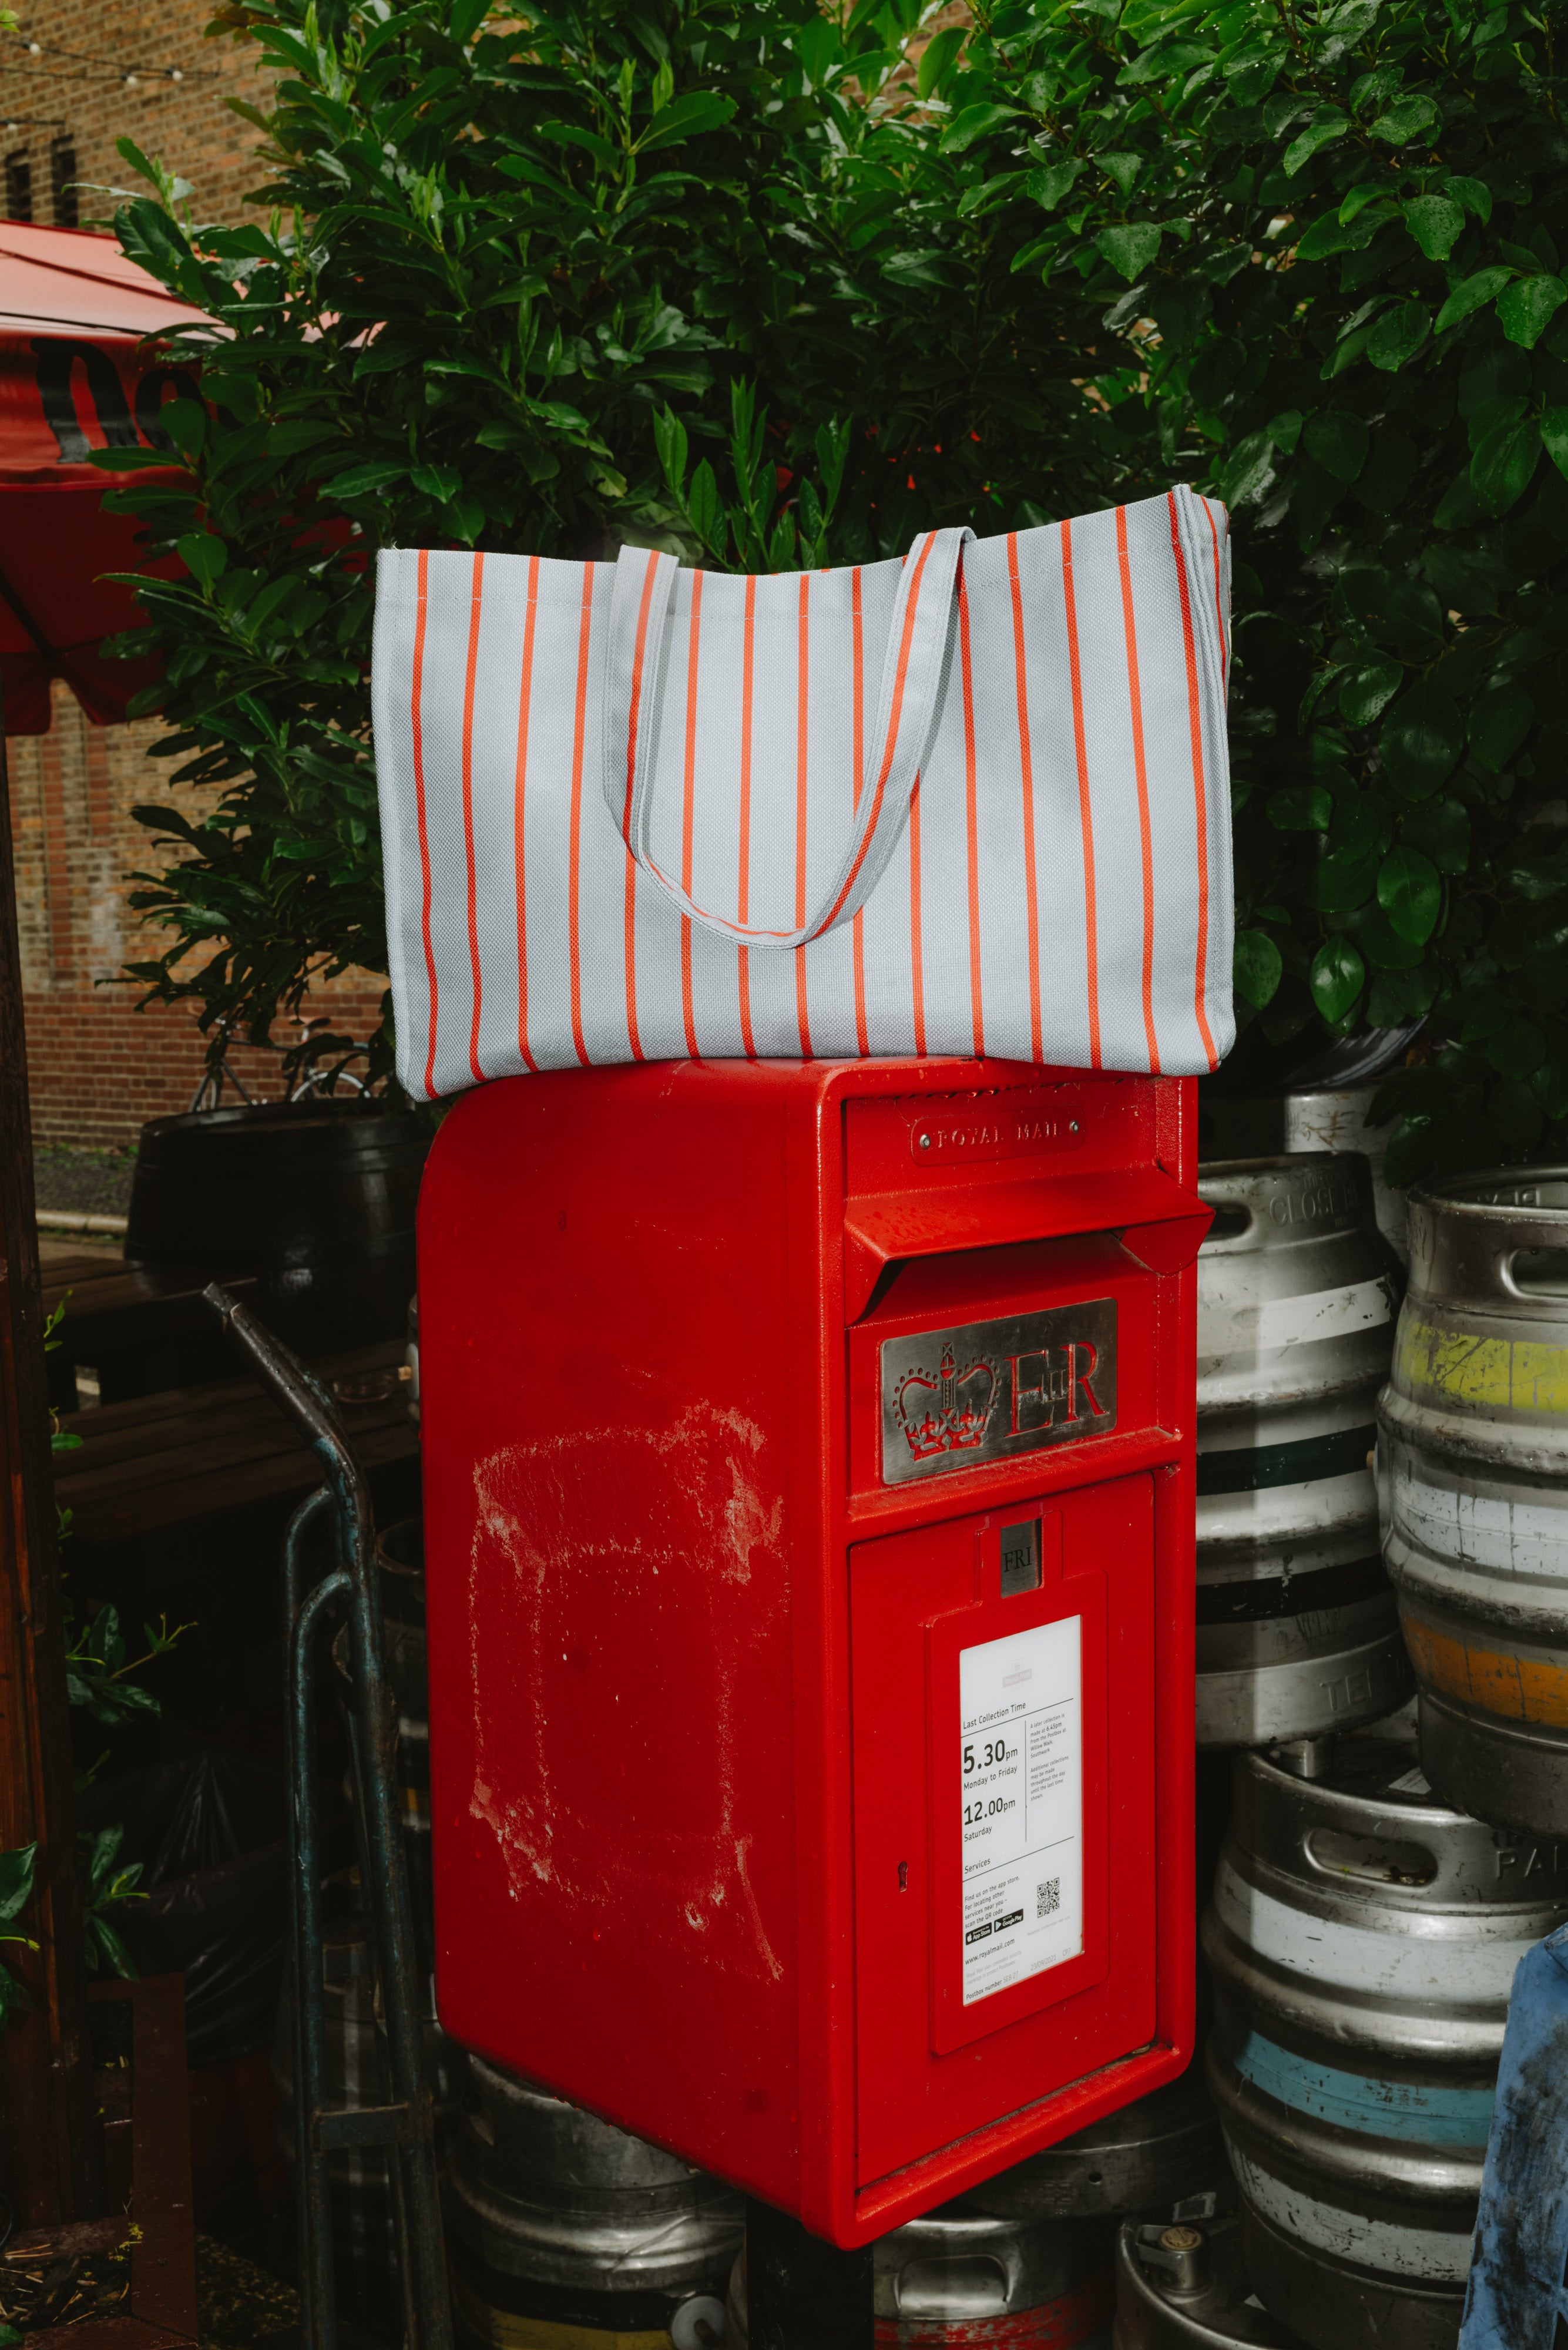 Striped Studio Bag by Colours of Arley x ADAM JONES - Wrexham